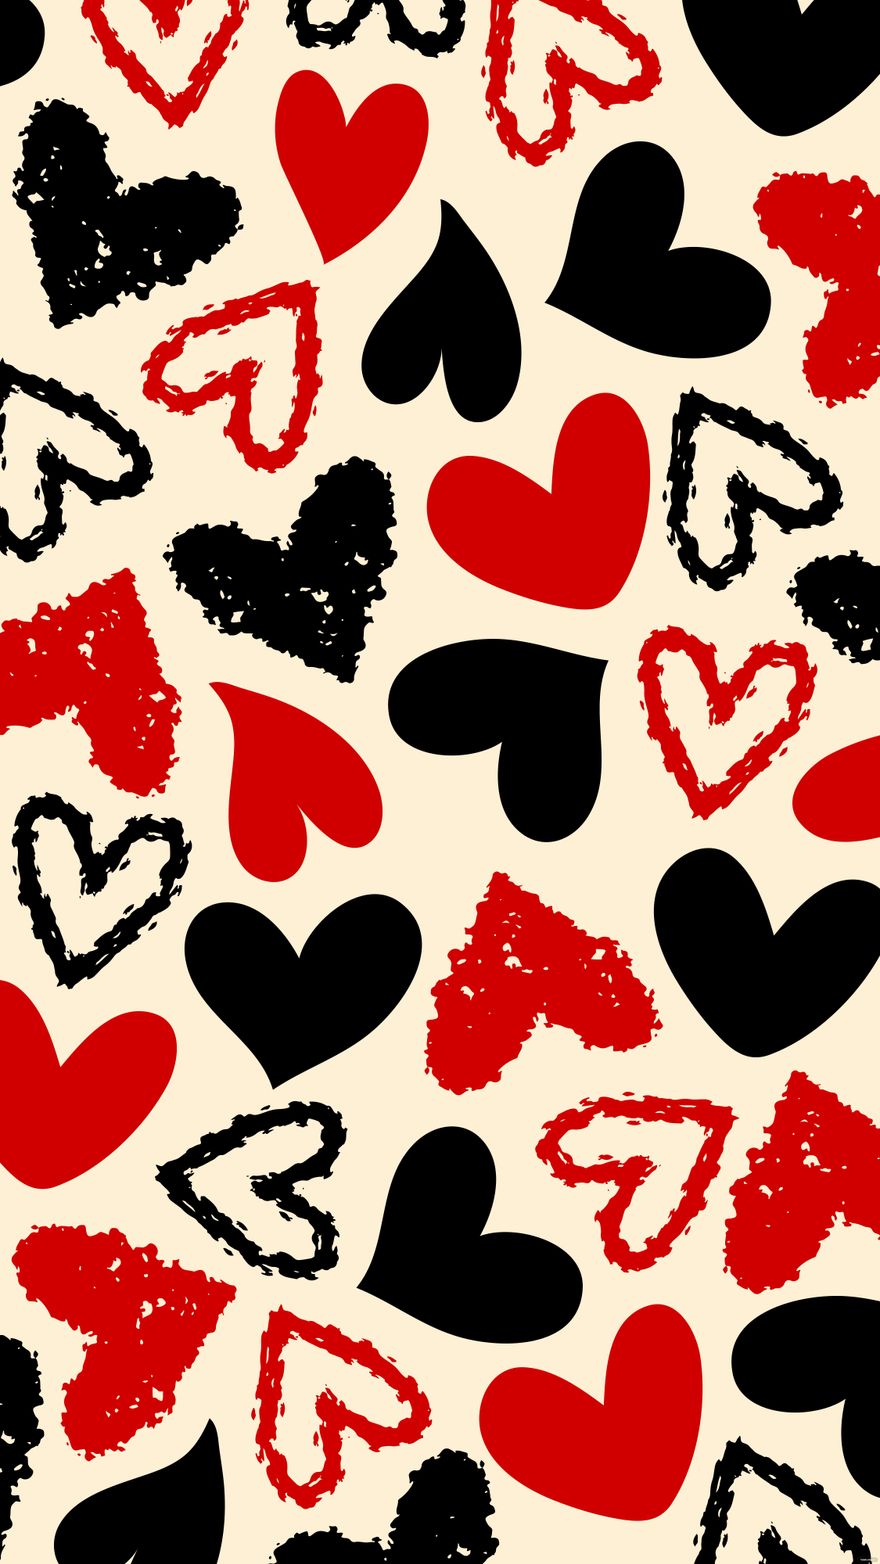 Free Red and Black Heart Background - EPS, Illustrator, JPG, SVG |  